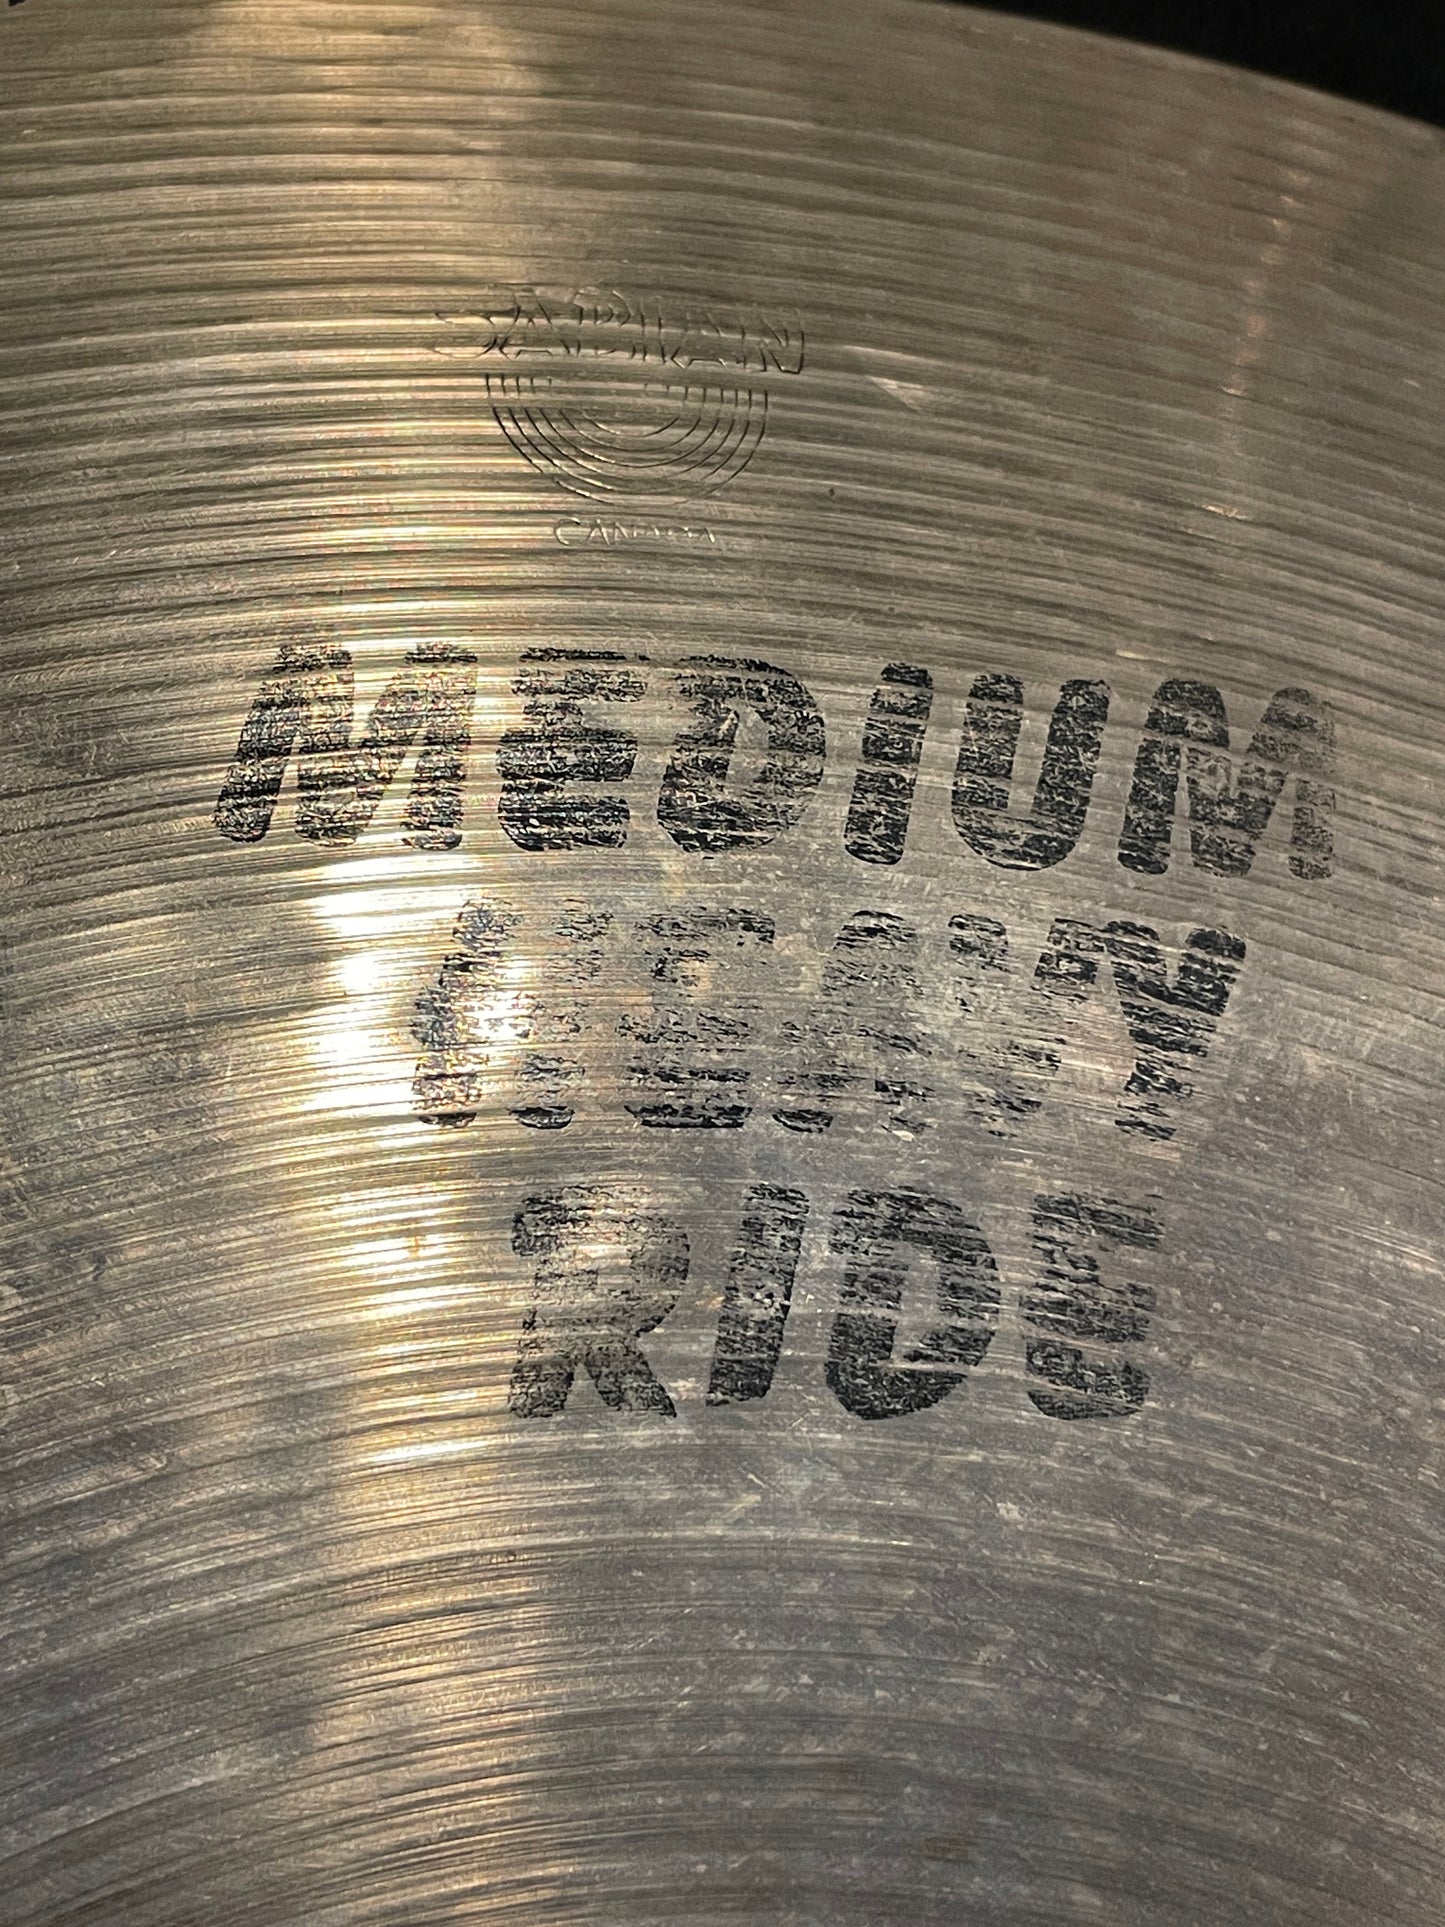 20" Sabian HH 1980s Medium Heavy Ride Cymbal 2618g